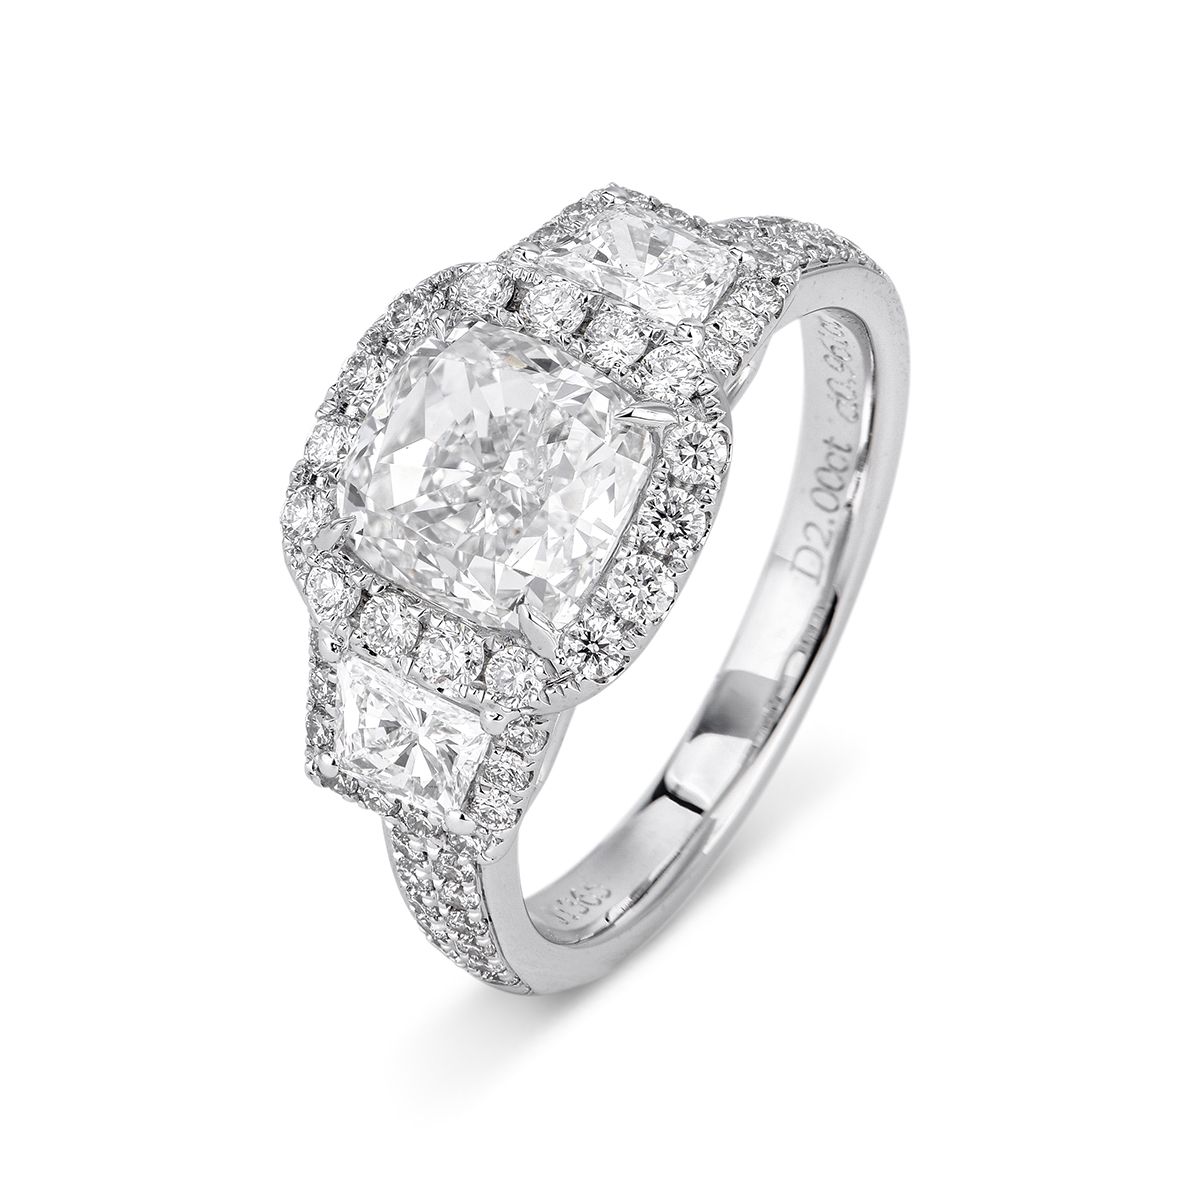  White Diamond Ring, 2.00 Ct. (2.96 Ct. TW), Cushion shape, GIA Certified, 7183972114